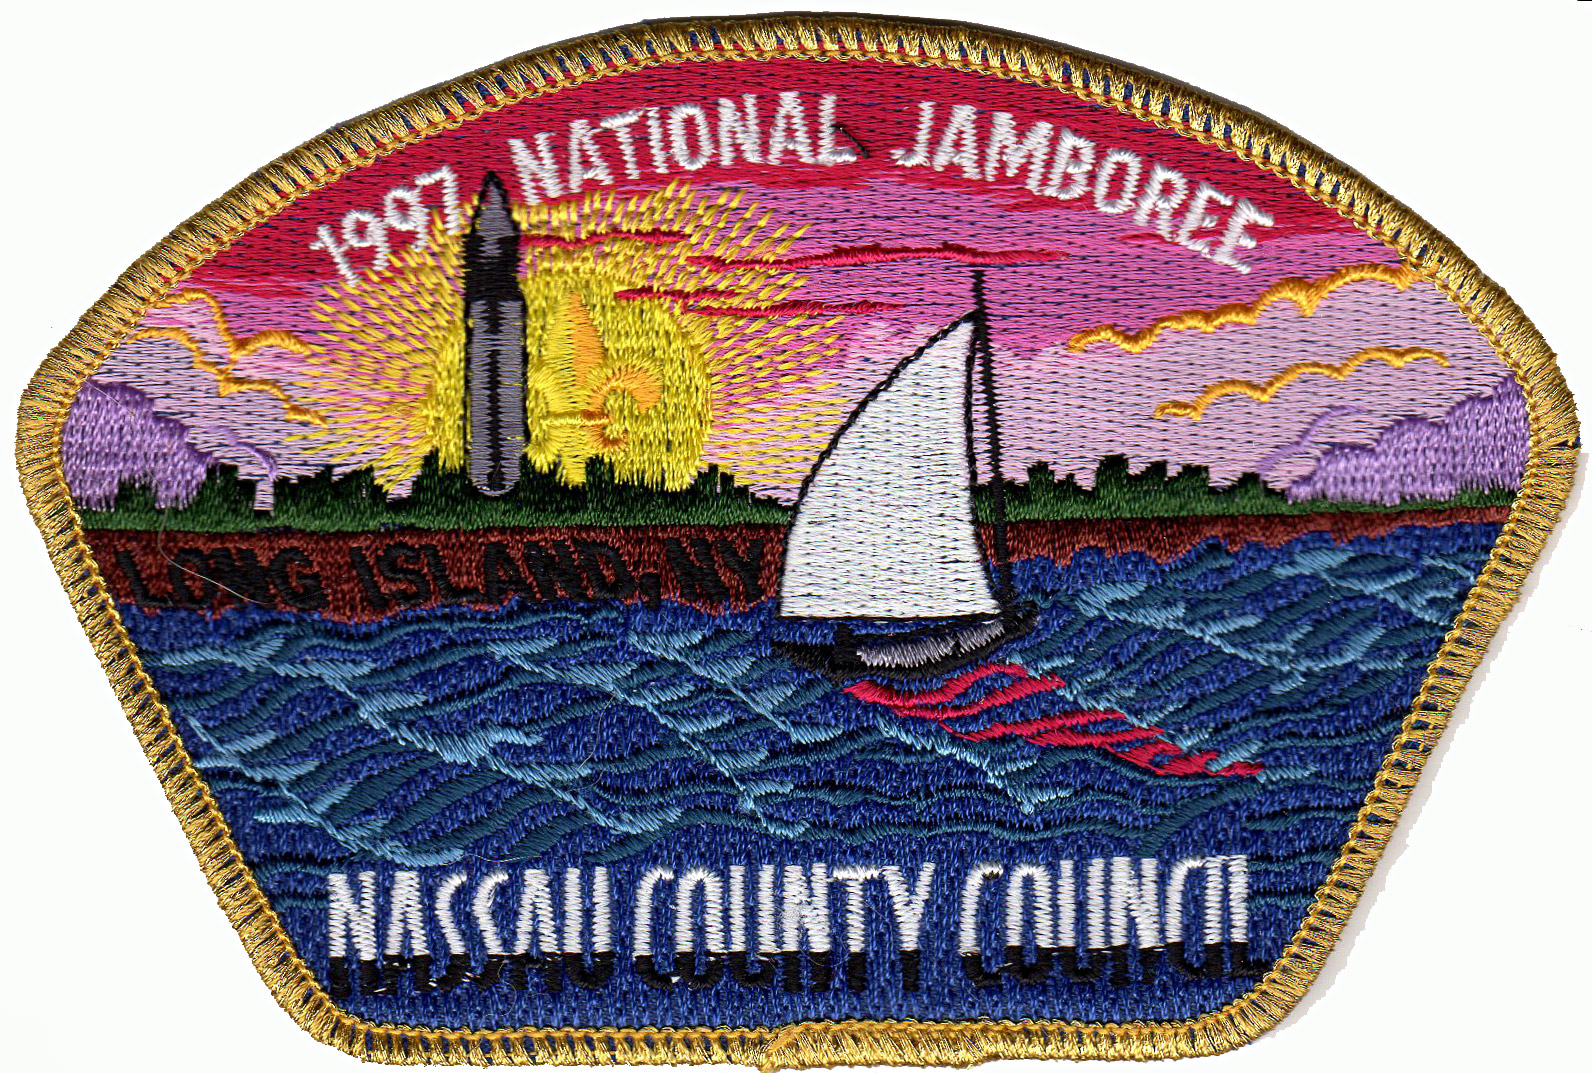 1997 National Jamboree CSP